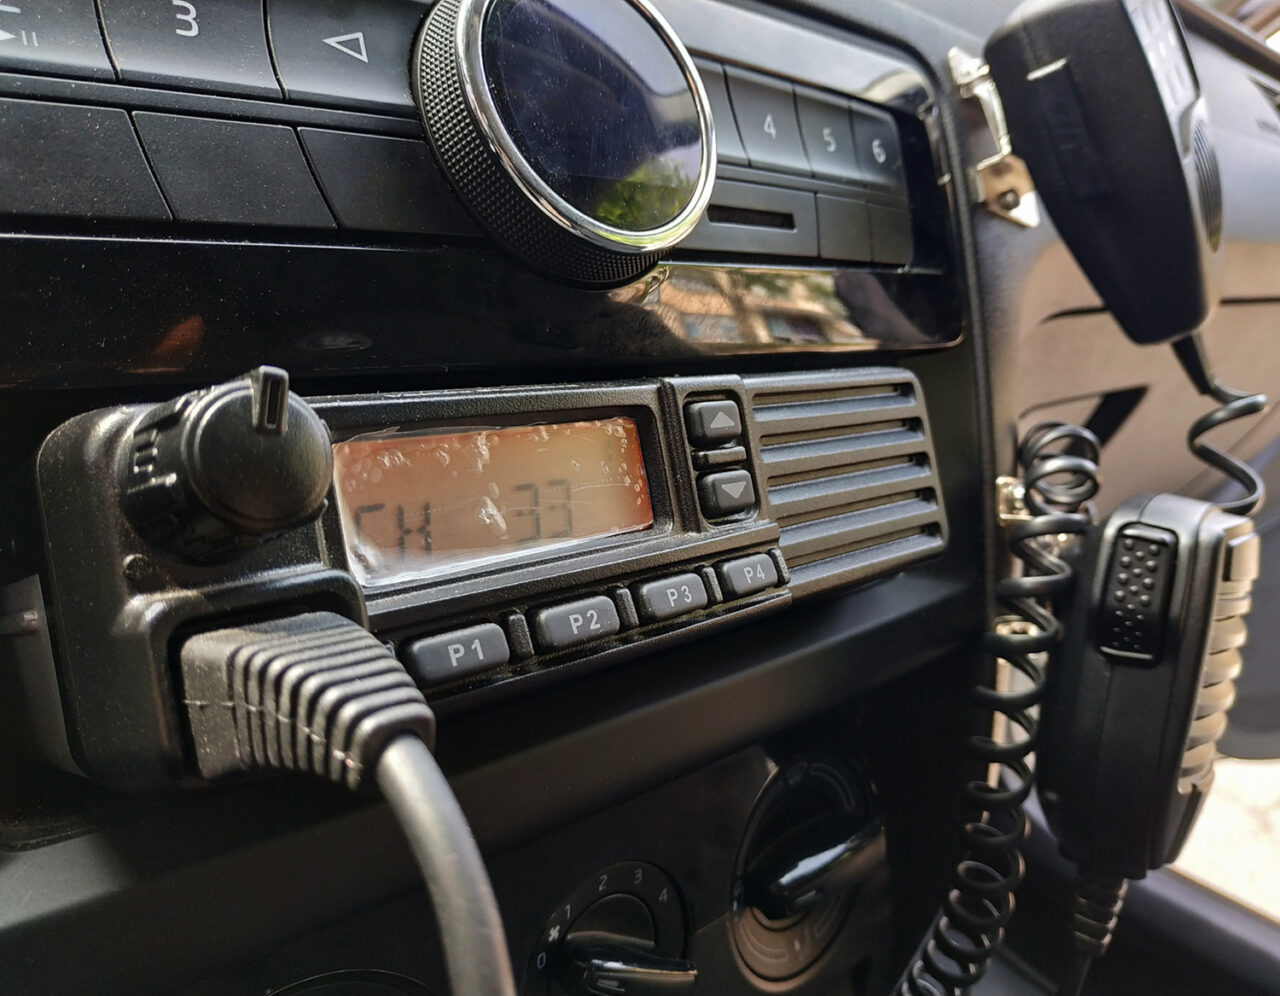 Police patrol car radio equipment and microphone. Walkie-talkie.